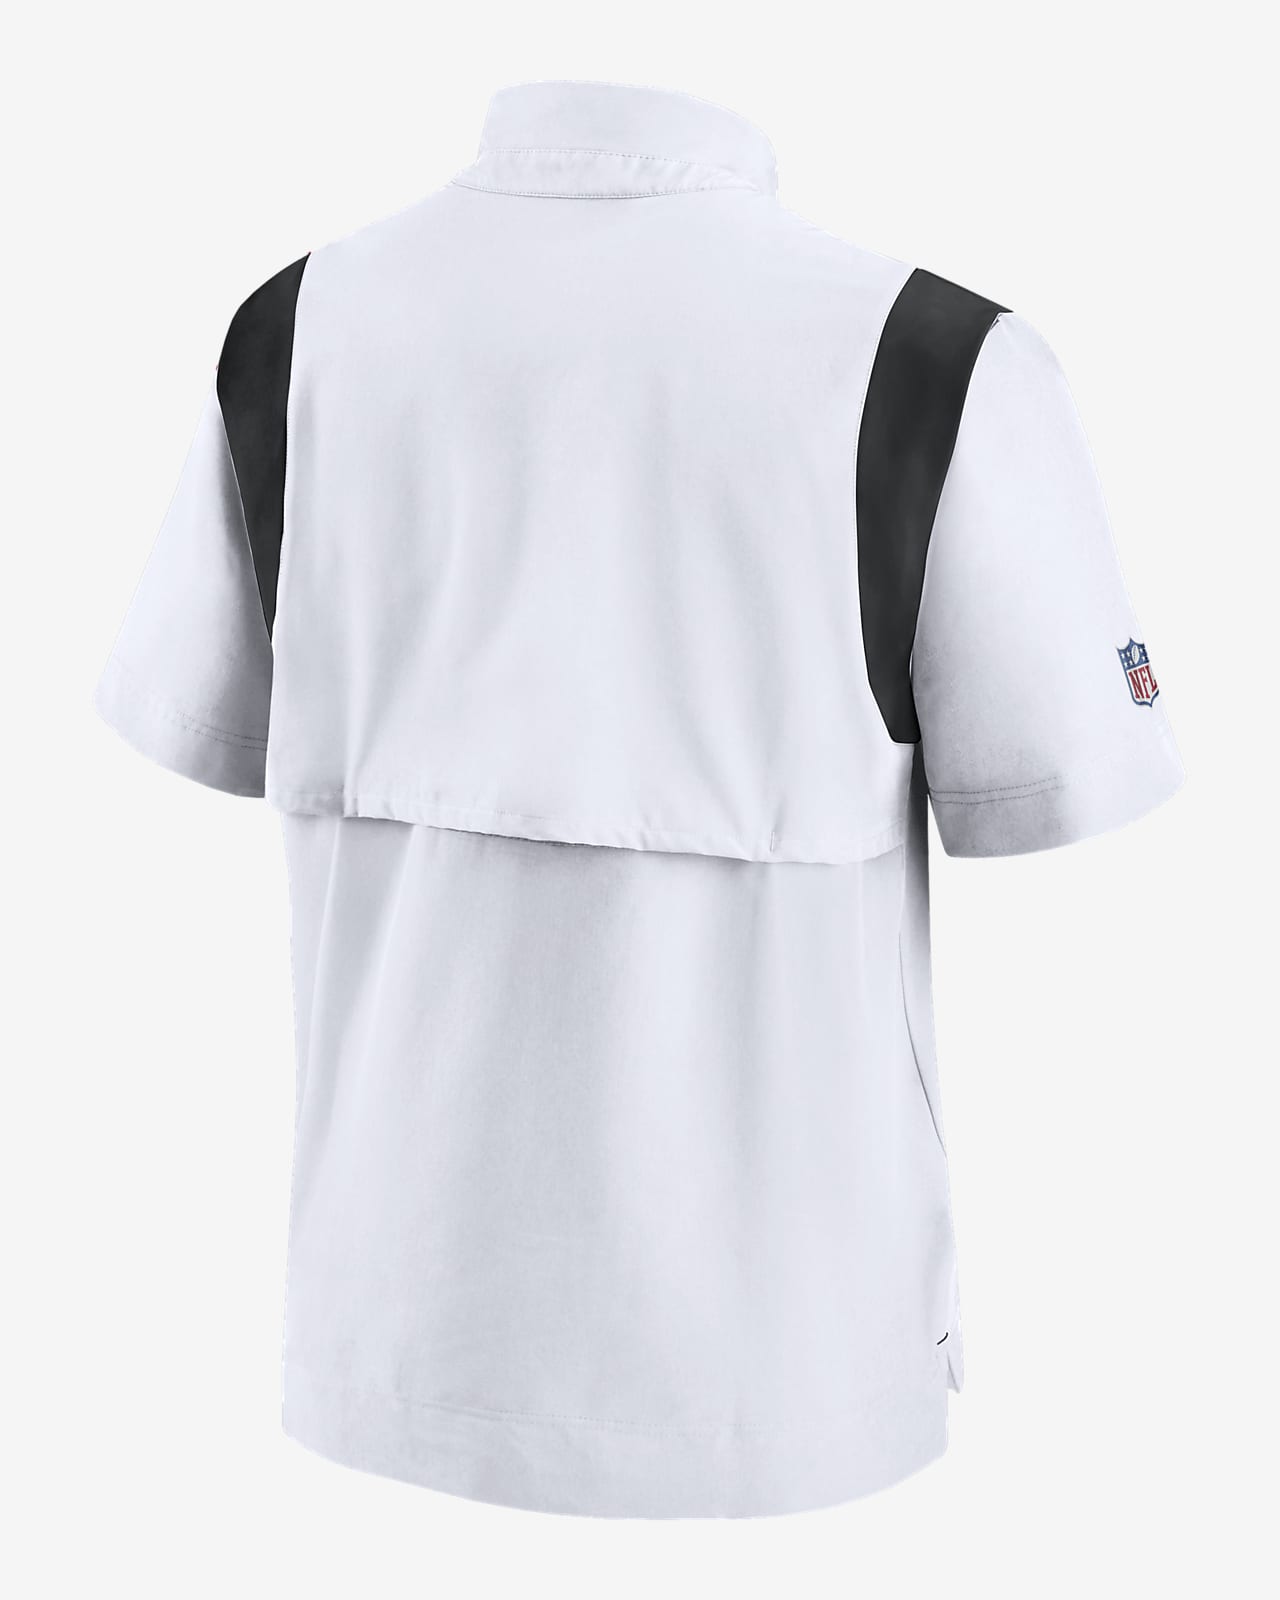 Nike Lockup Split (NFL Las Vegas Raiders) Women's Mid V-Neck T-Shirt.